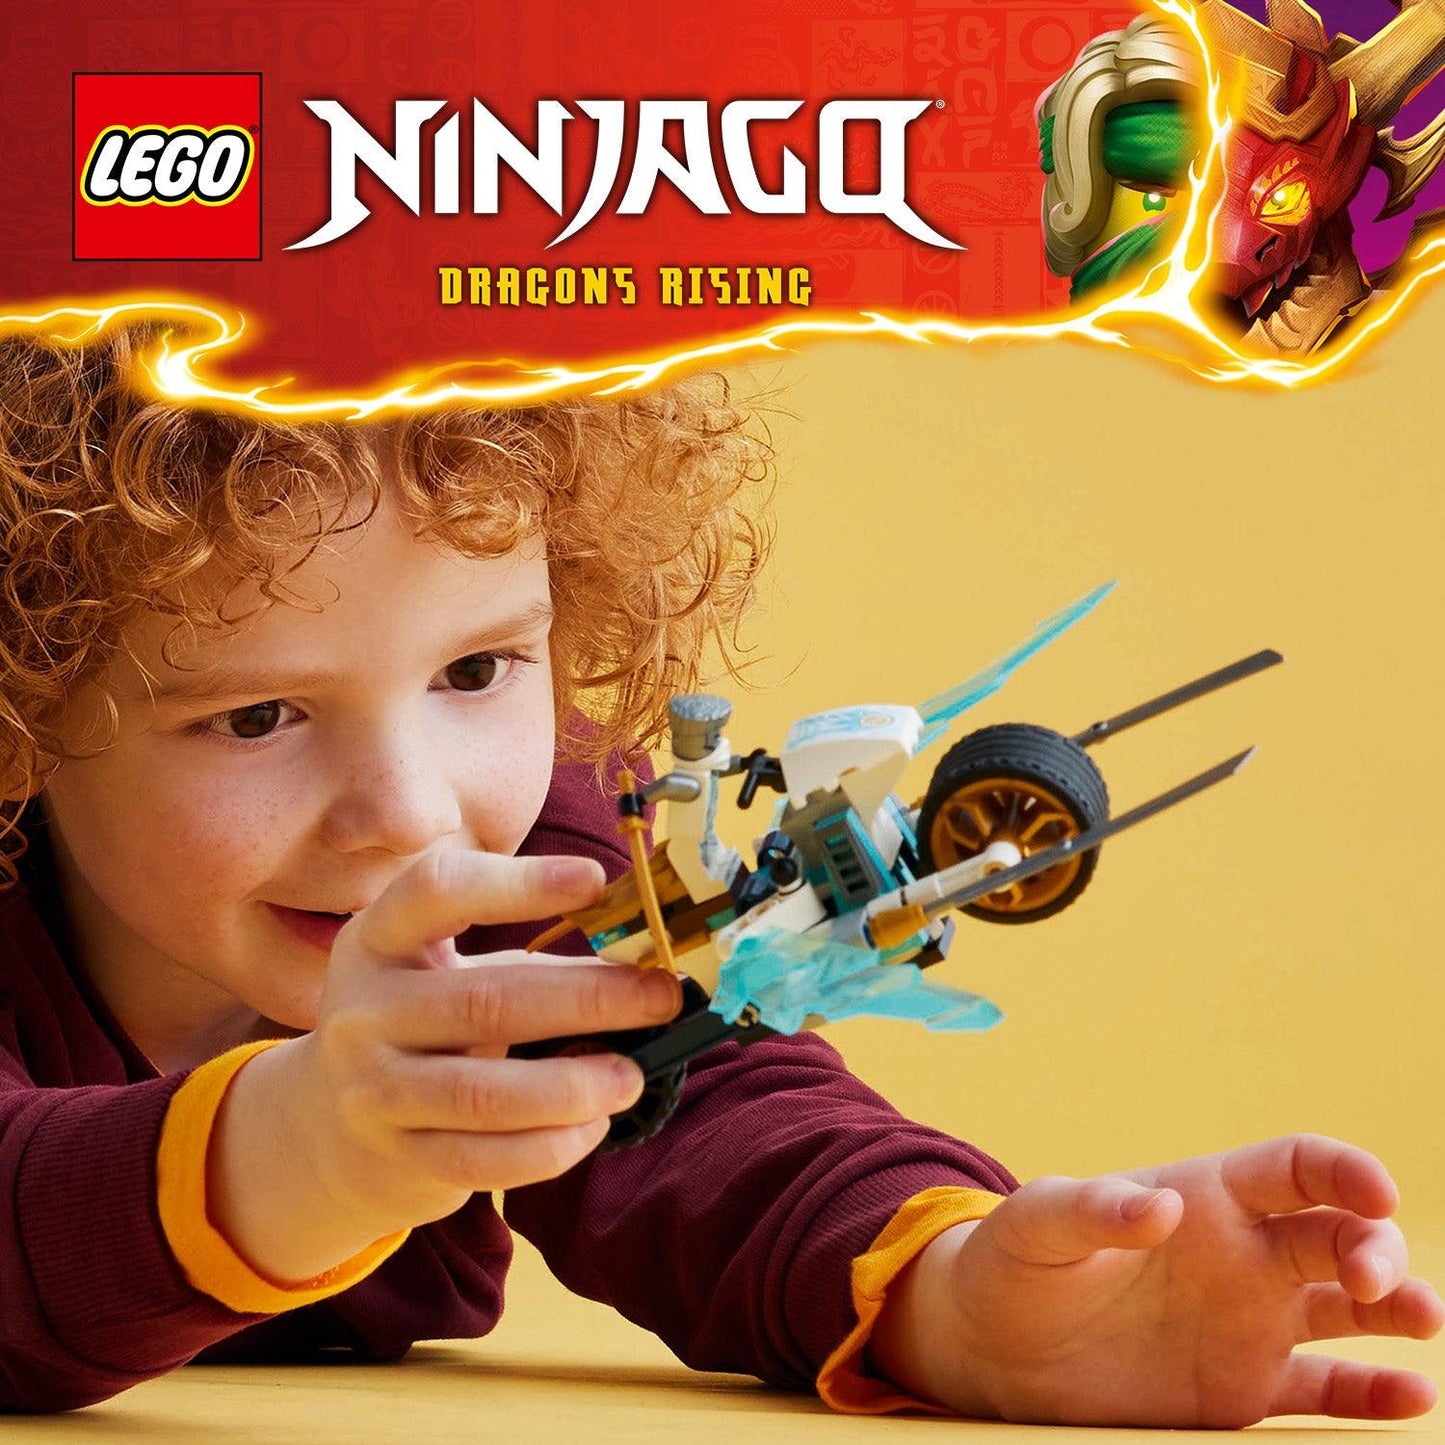 LEGO Zane's IJscomotorfiets 71816 Ninjago (Pre-Order: verwacht juni) LEGO Ninjago @ 2TTOYS LEGO €. 8.49